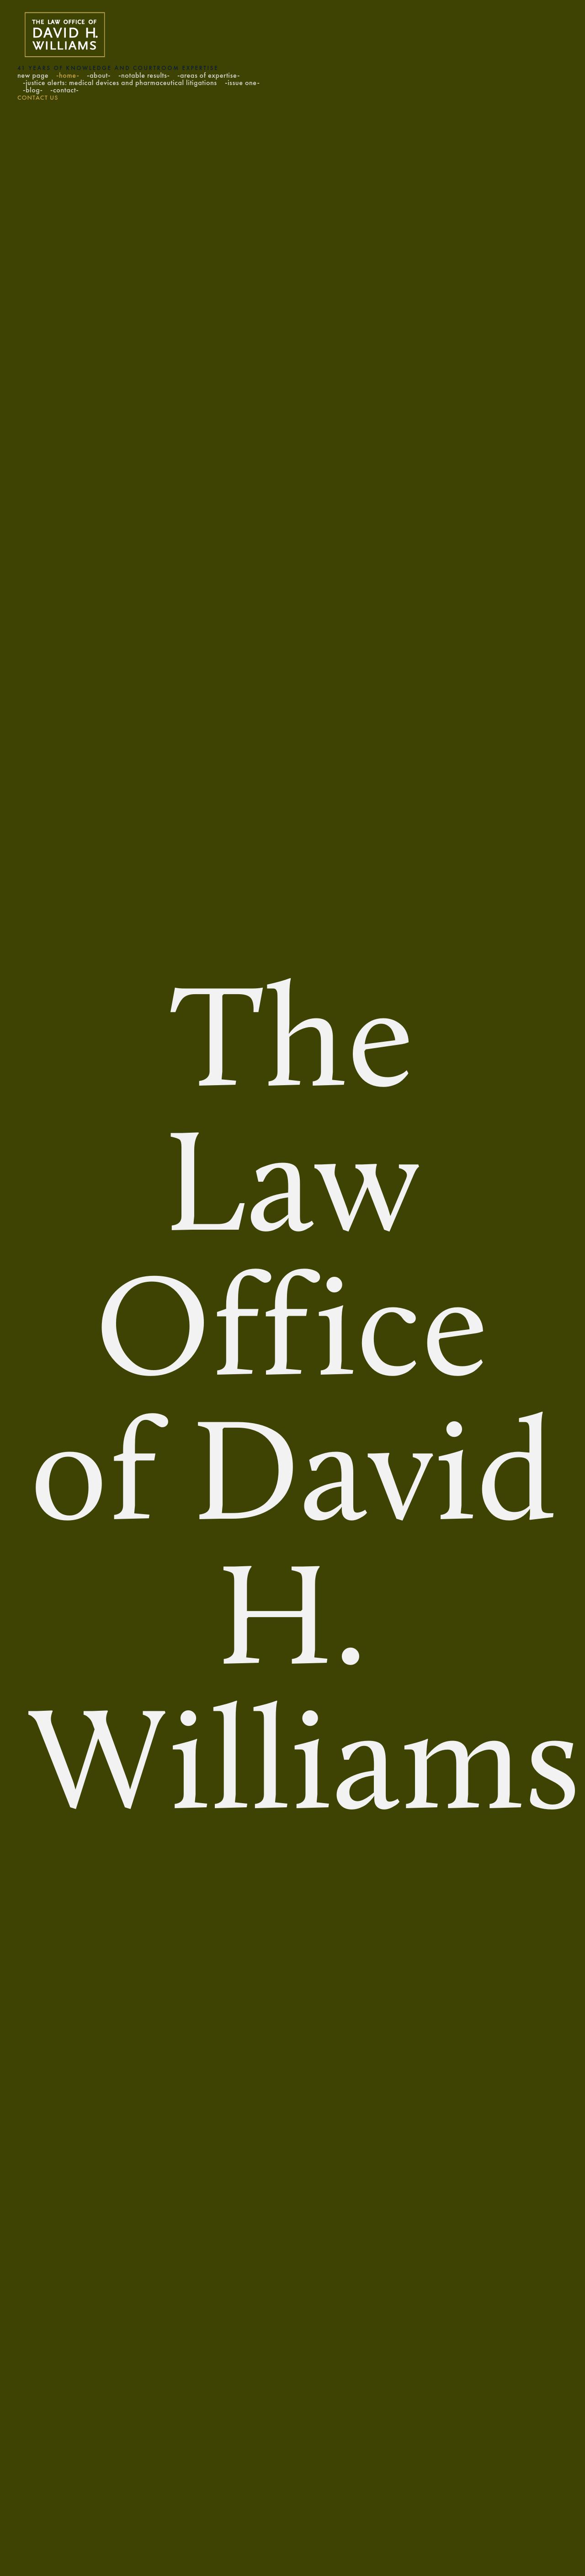 David H. Williams - Little Rock AR Lawyers